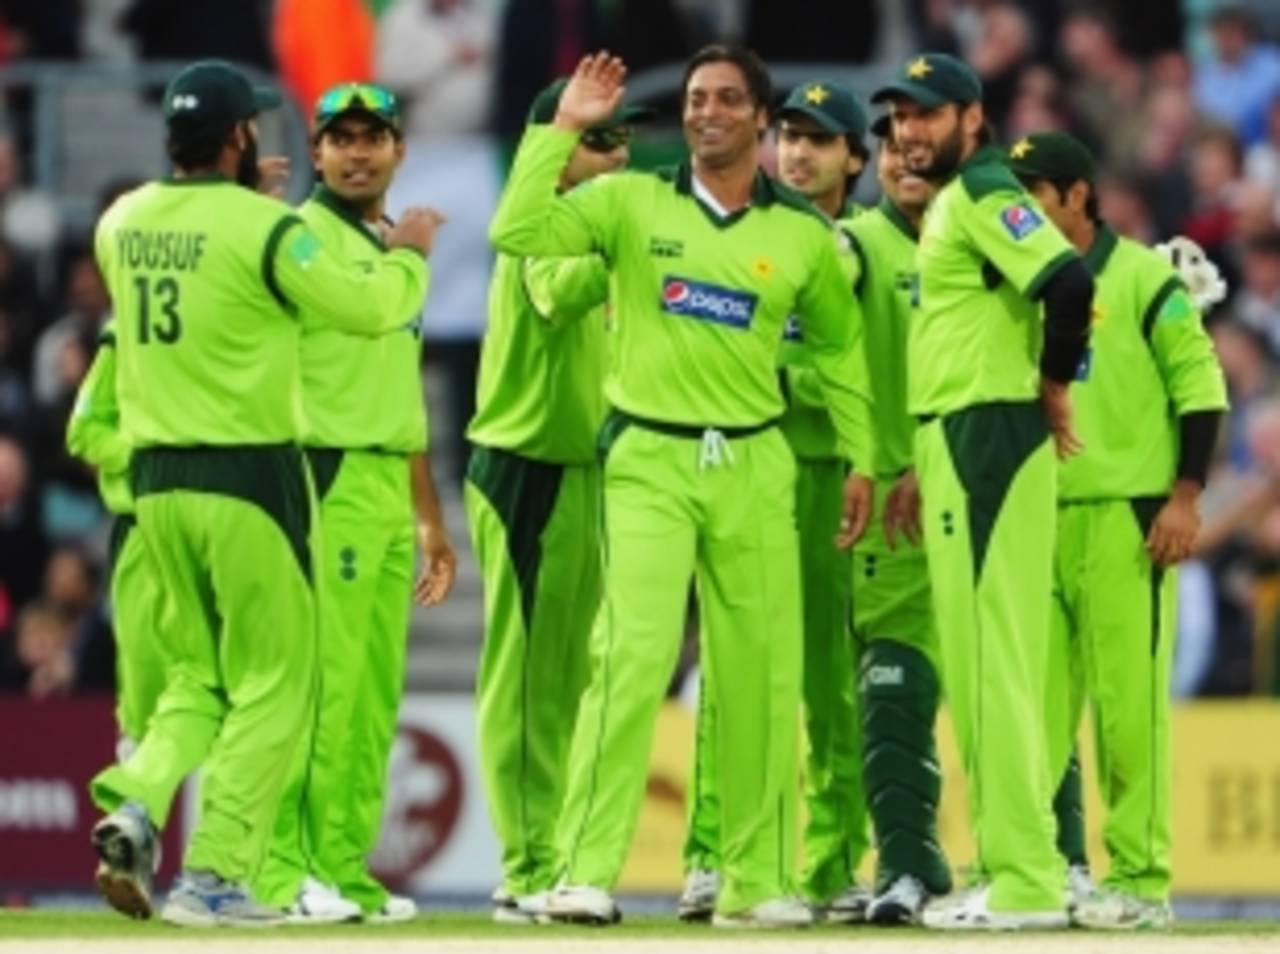 Shoaib Akhtar is congratulated after removing Jonathan Trott, England v Pakistan, 3rd ODI, The Oval, September 17 2010